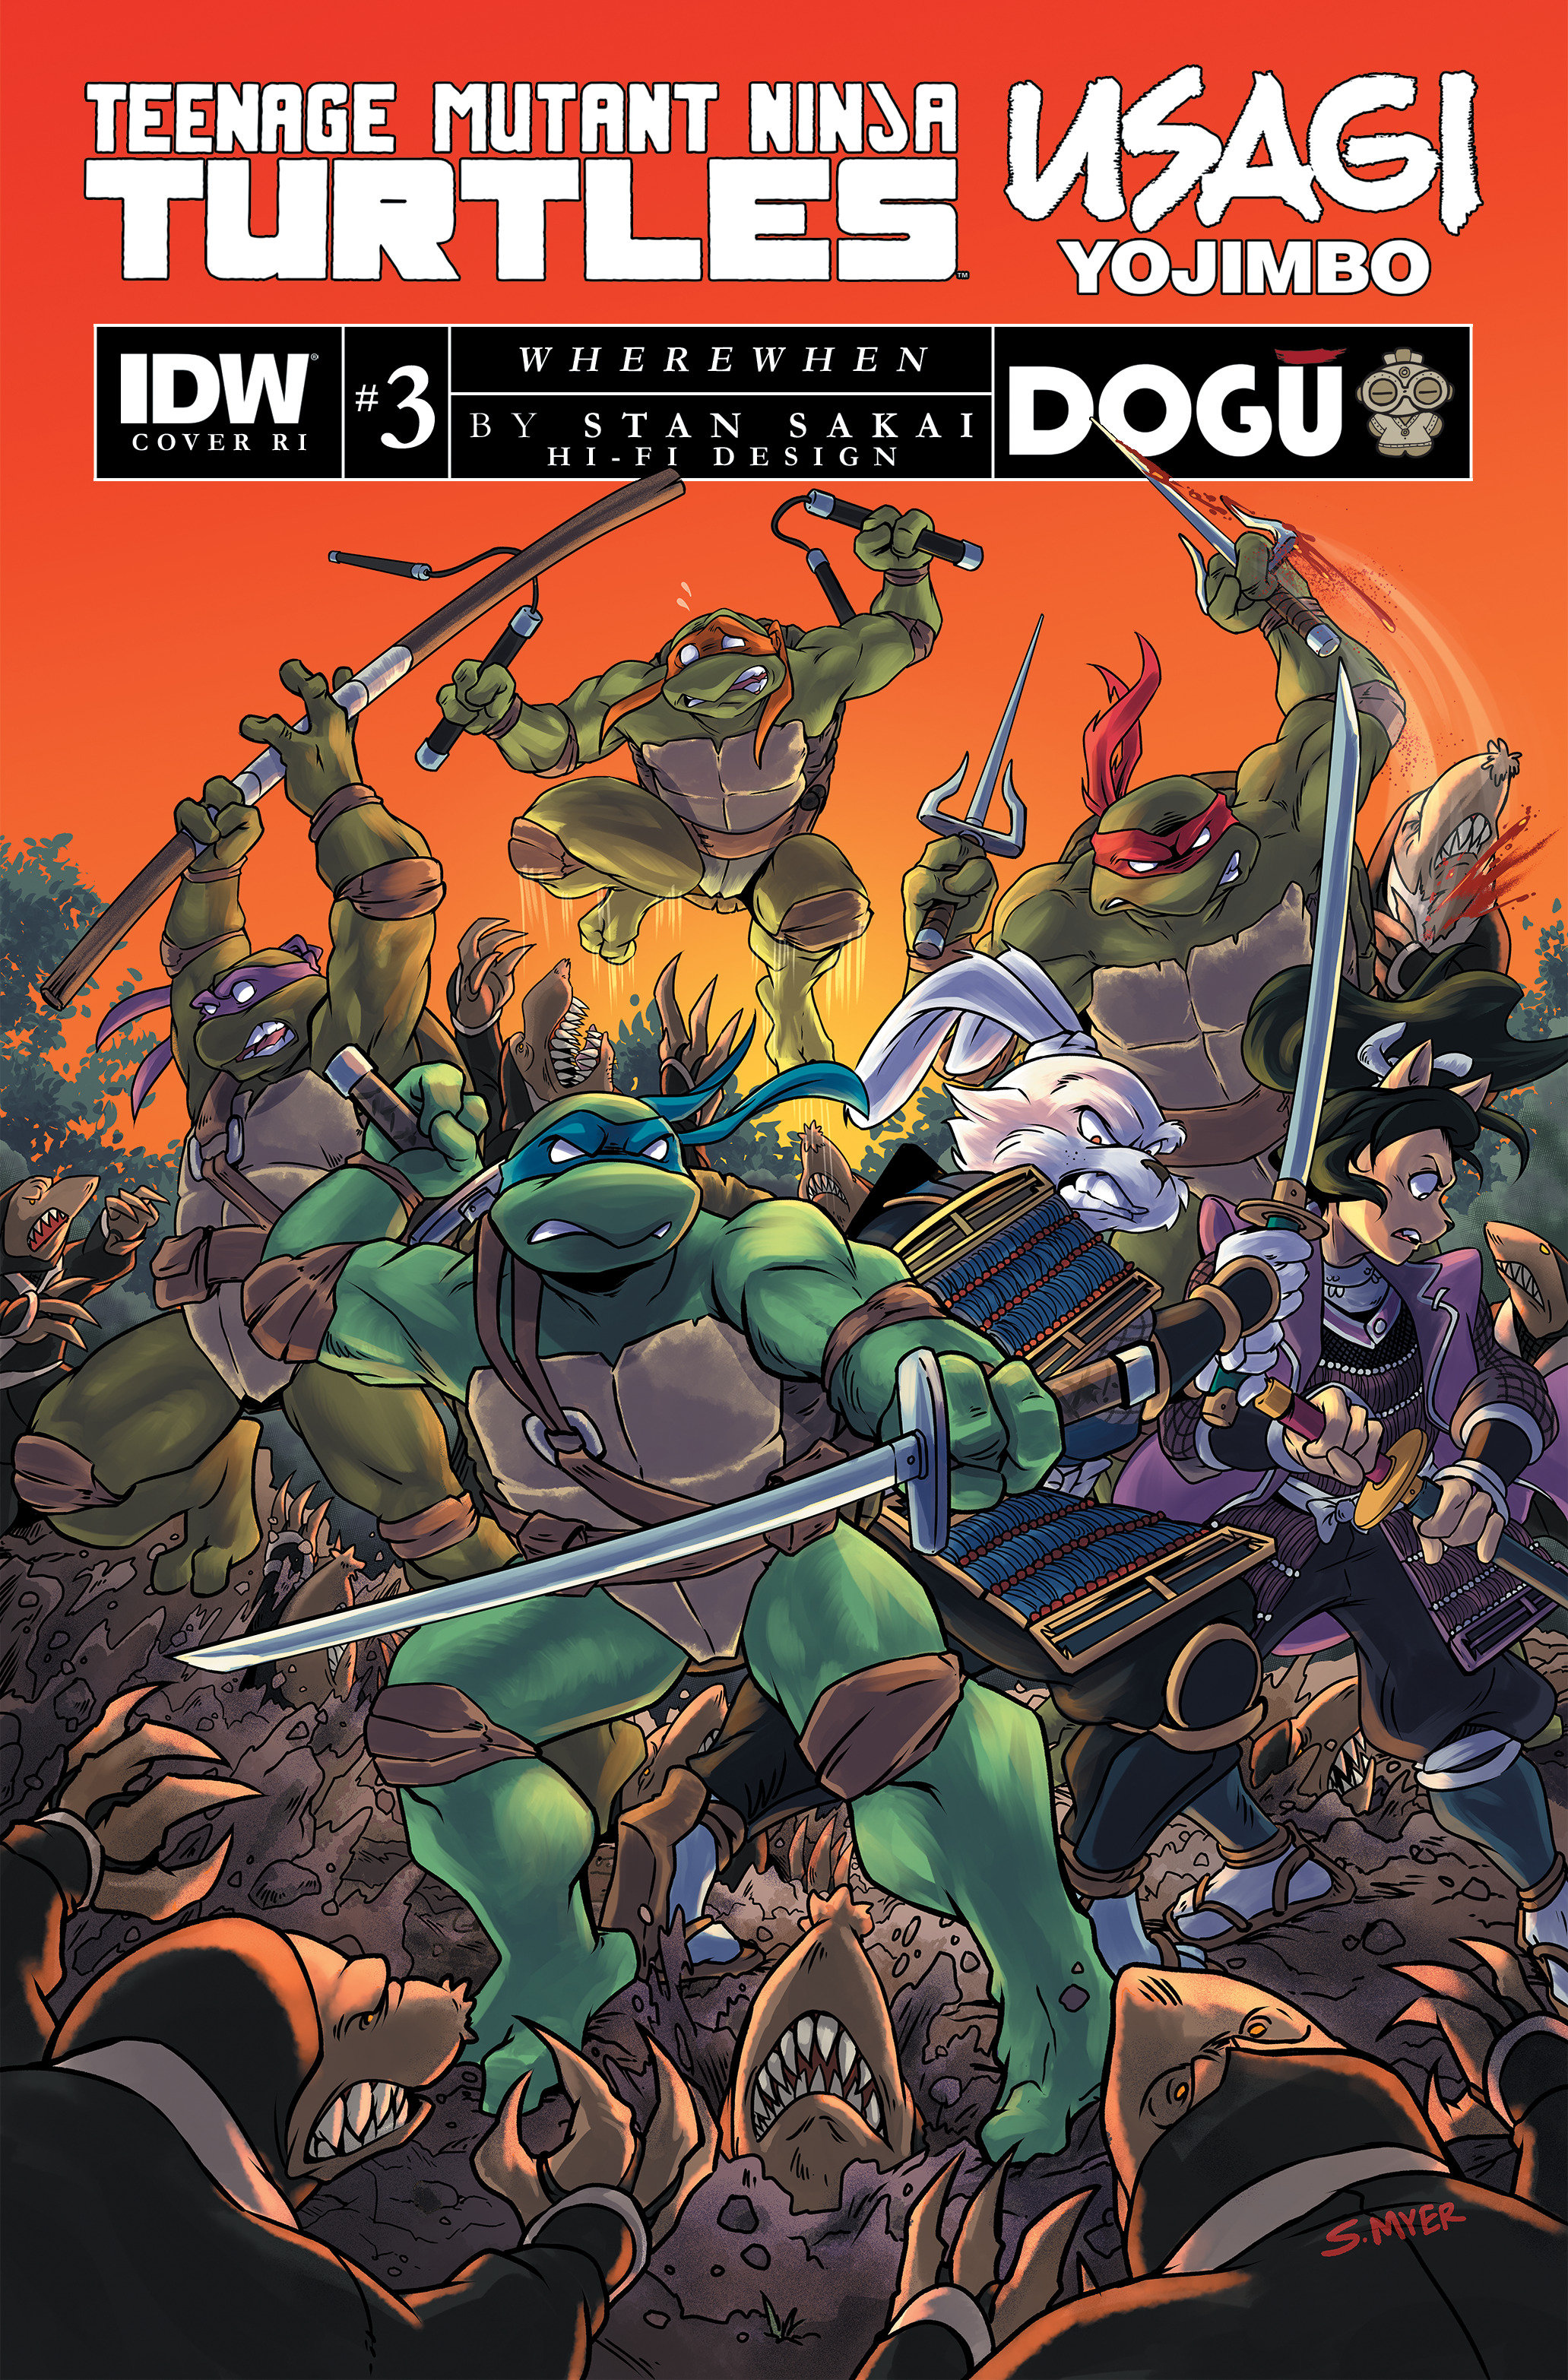 Teenage Mutant Ninja Turtles/Usagi Yojimbo WhereWhen #3 Cover C 1 for 10 Incentive Myer